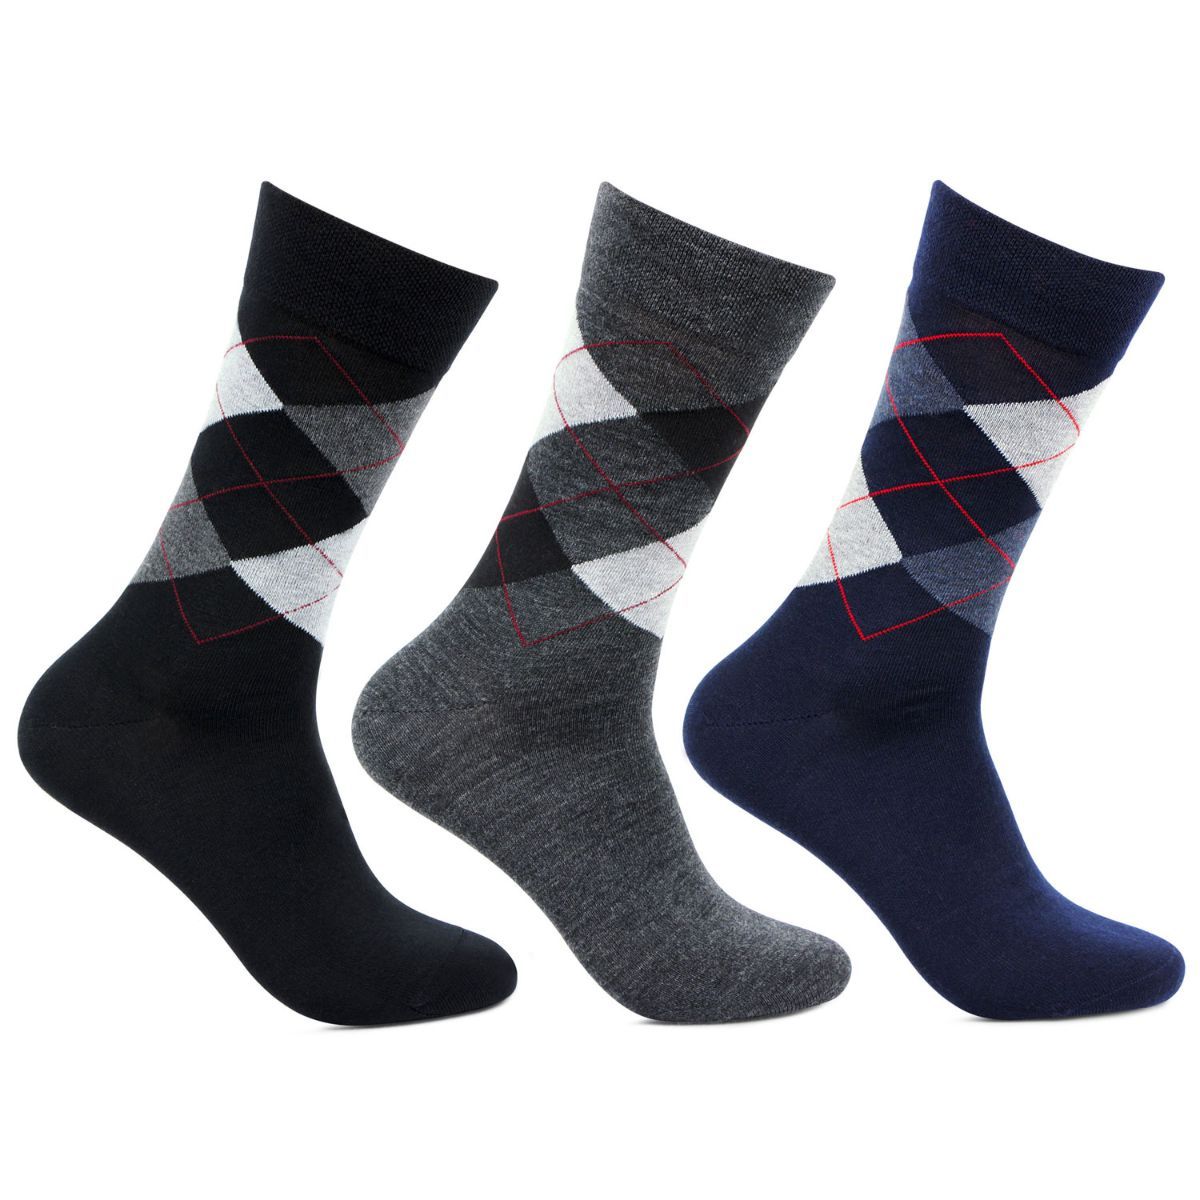 Bonjour Men's Classic Argyle Woolen Socks, Pack Of 3 - Multi-Color (Free size)